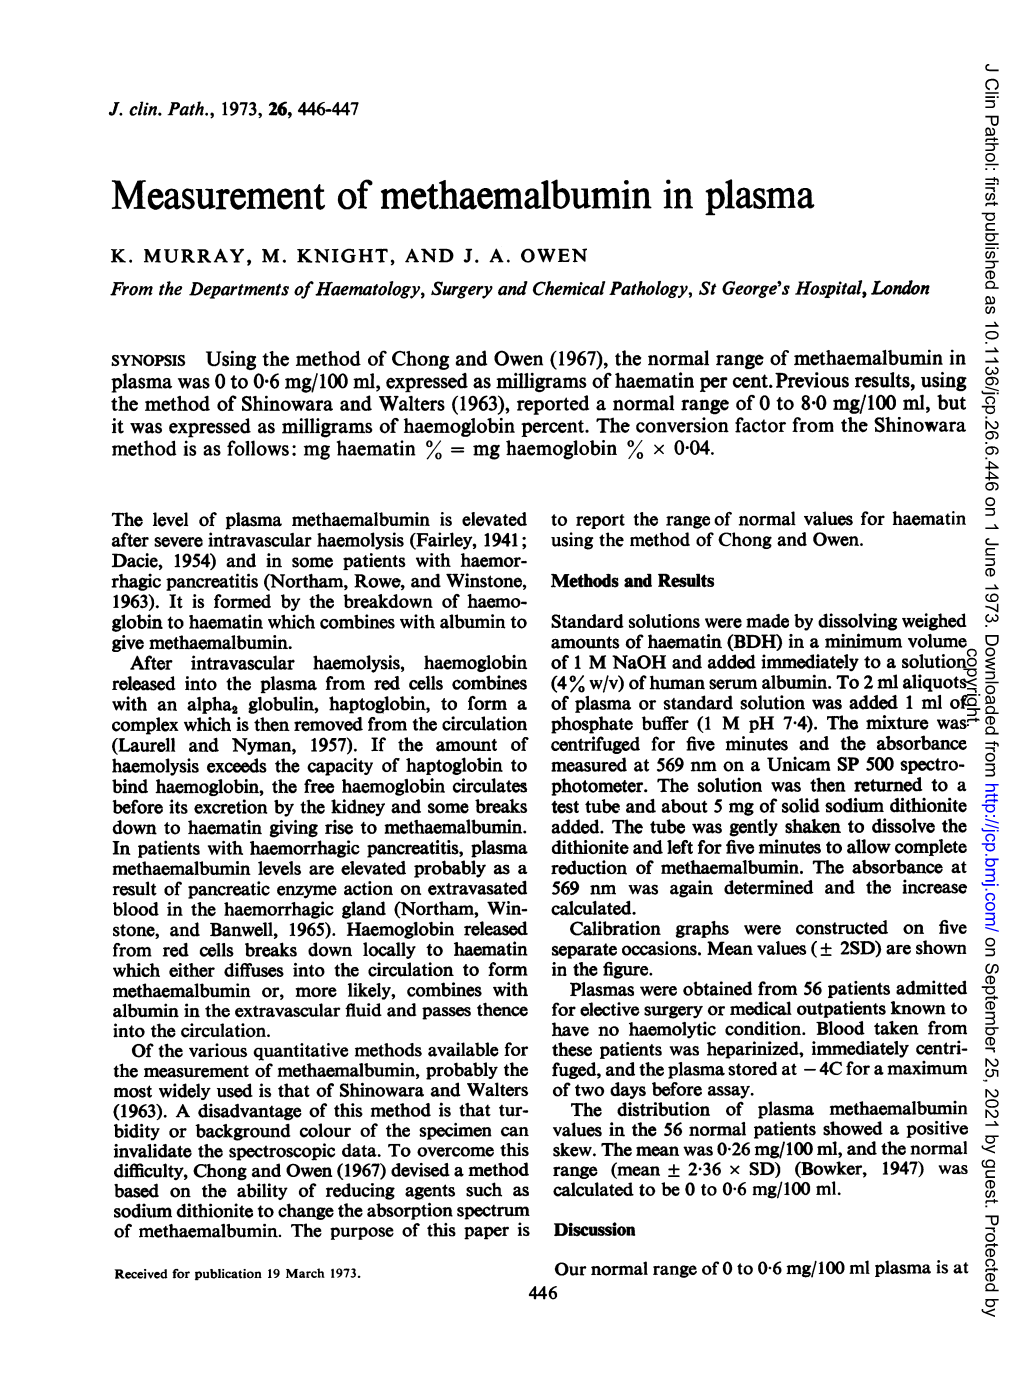 Measurement of Methaemalbumin in Plasma